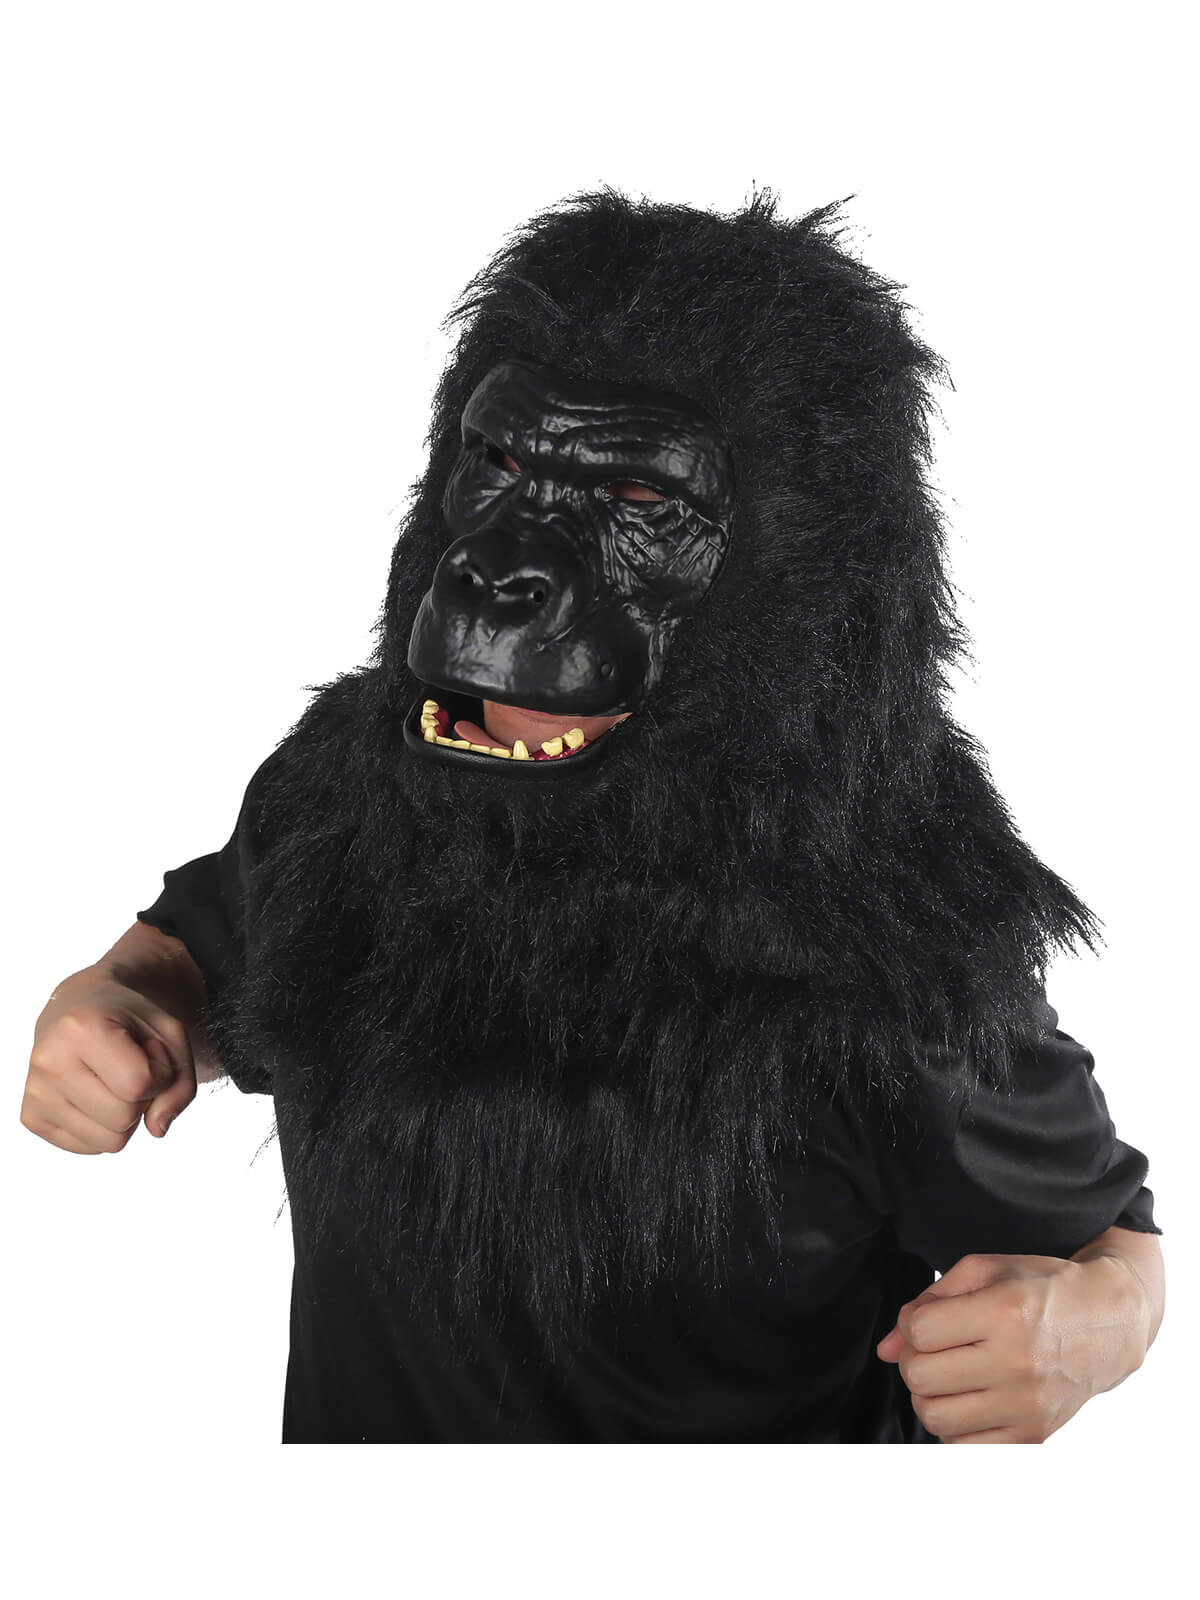 Gorilla Mask w/Moving Mouth